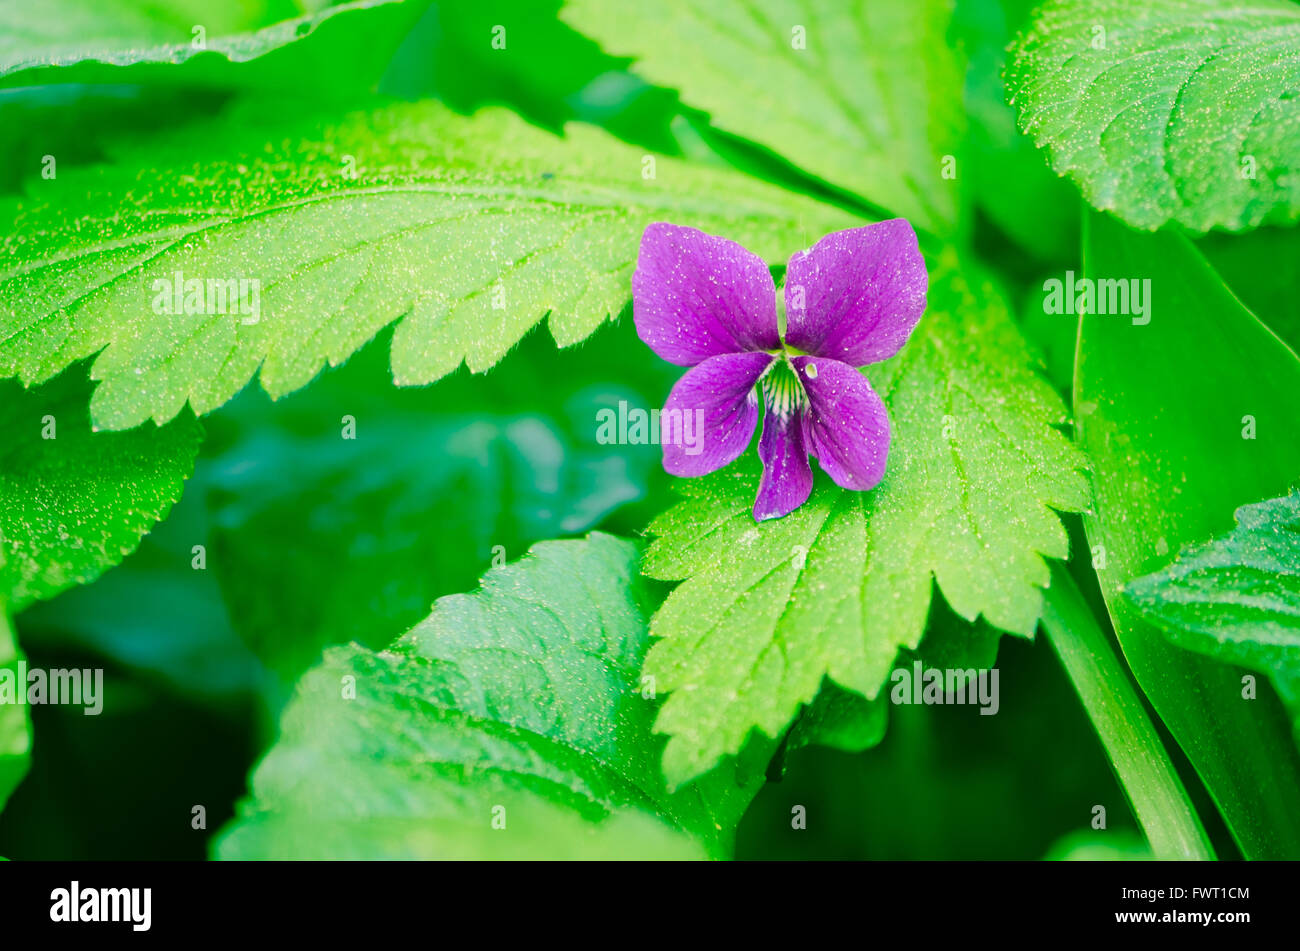 purple violet flower over green leaves Stock Photo